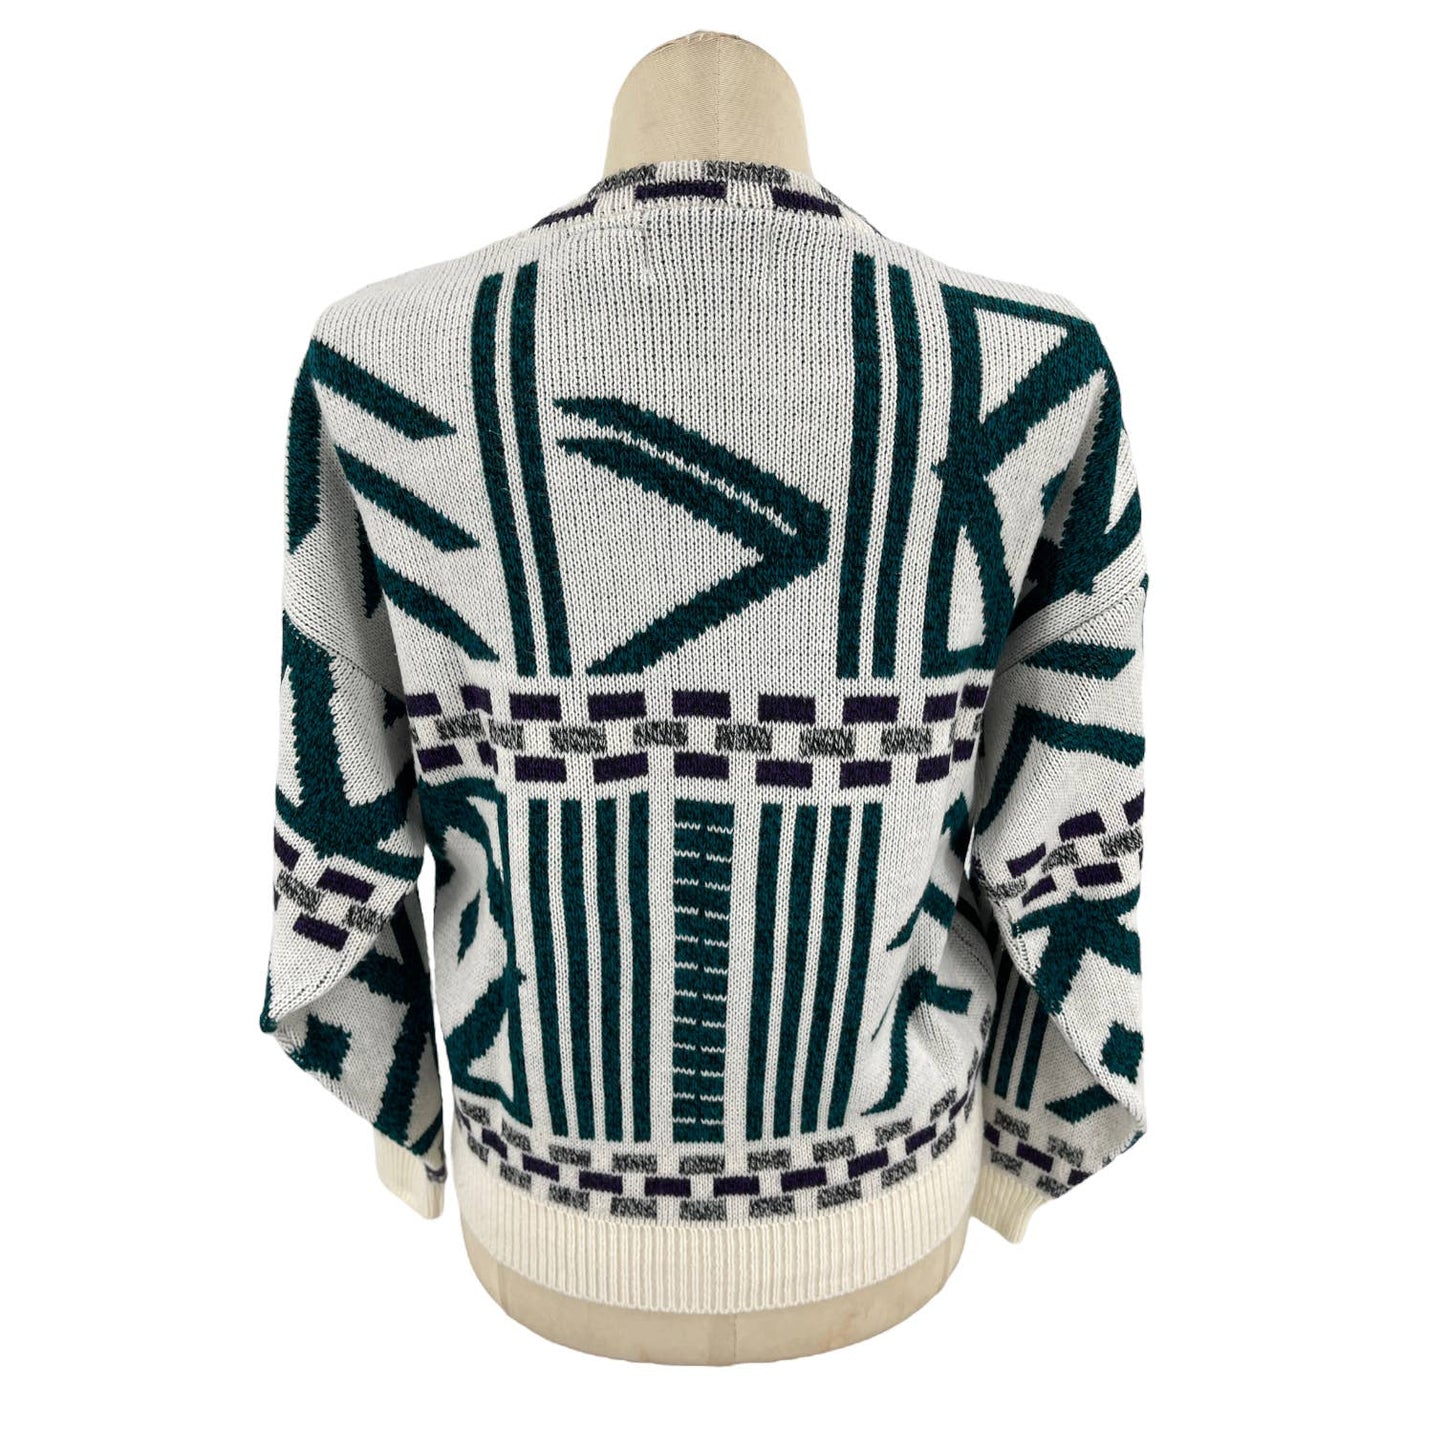 Vintage 80s Cream Geometric Sweater Leather Details Pullover El Dorado Size XL